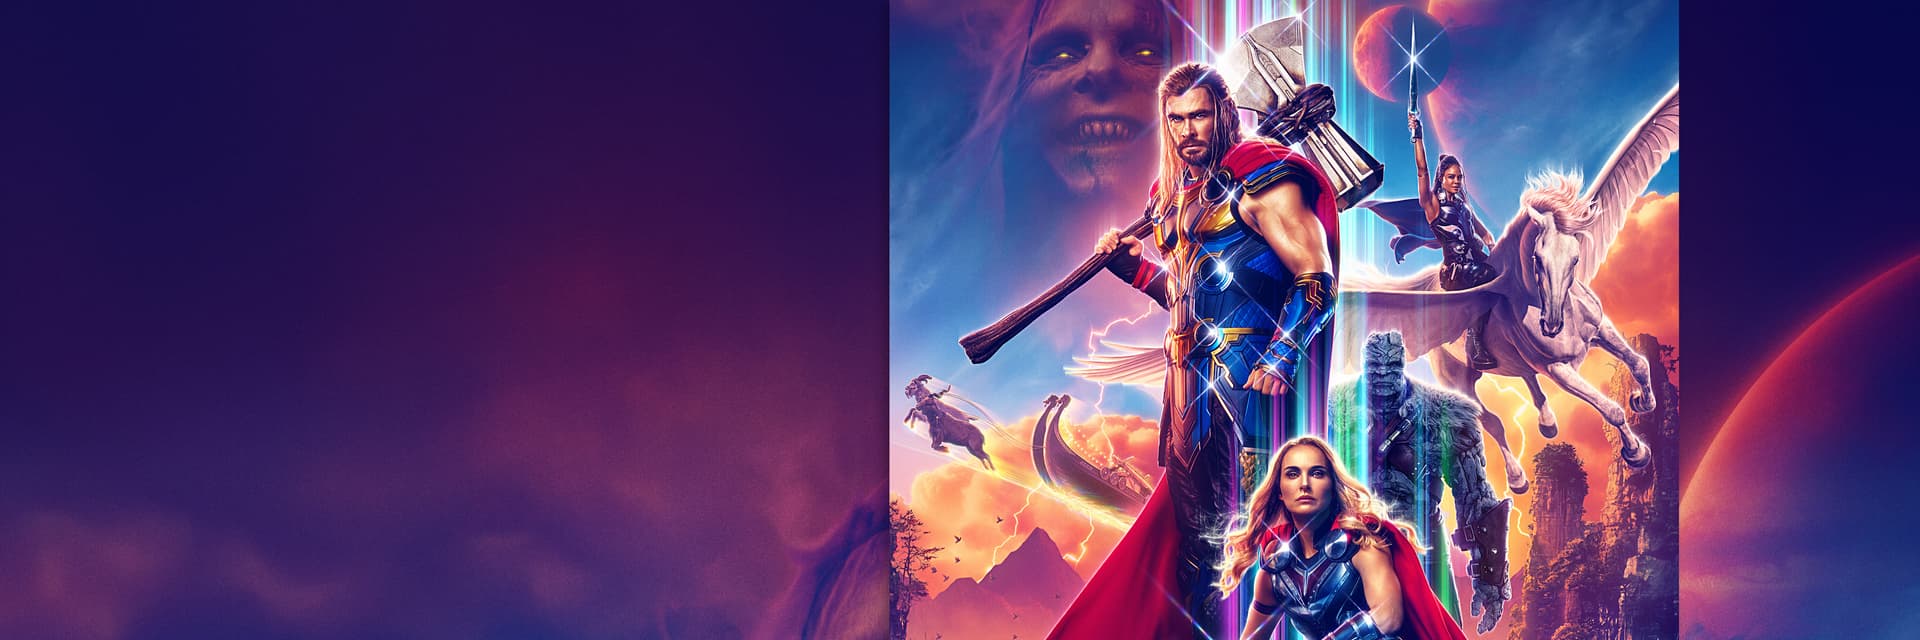 Marvel Studios' Thor: Love and Thunder Thor 4 Movie Poster